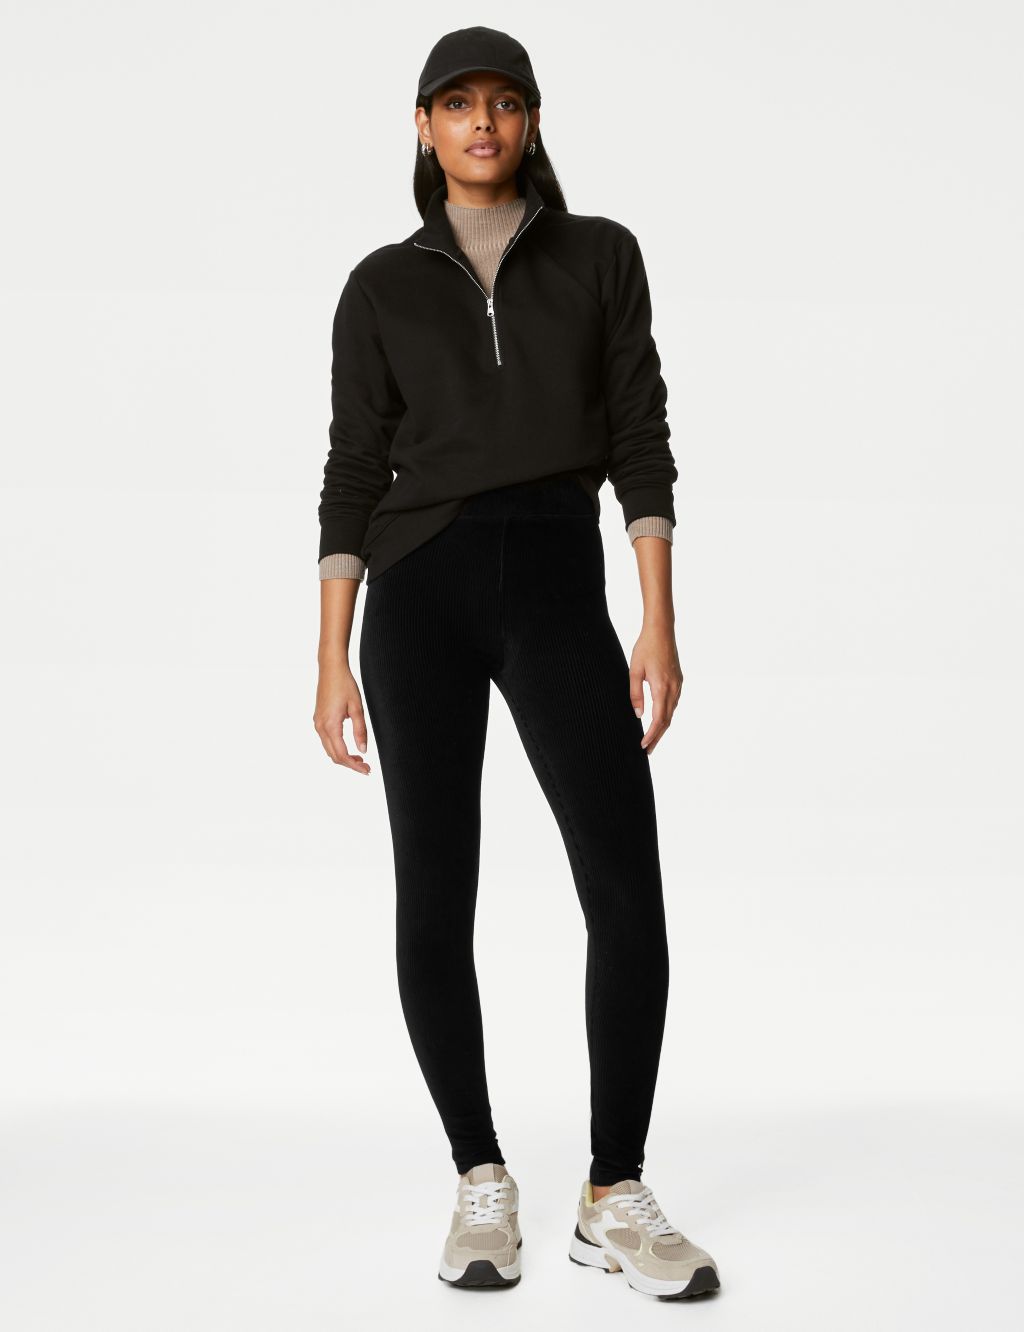 Thick black seam leggings (M&S) #justclothez #accra #clothingboutique